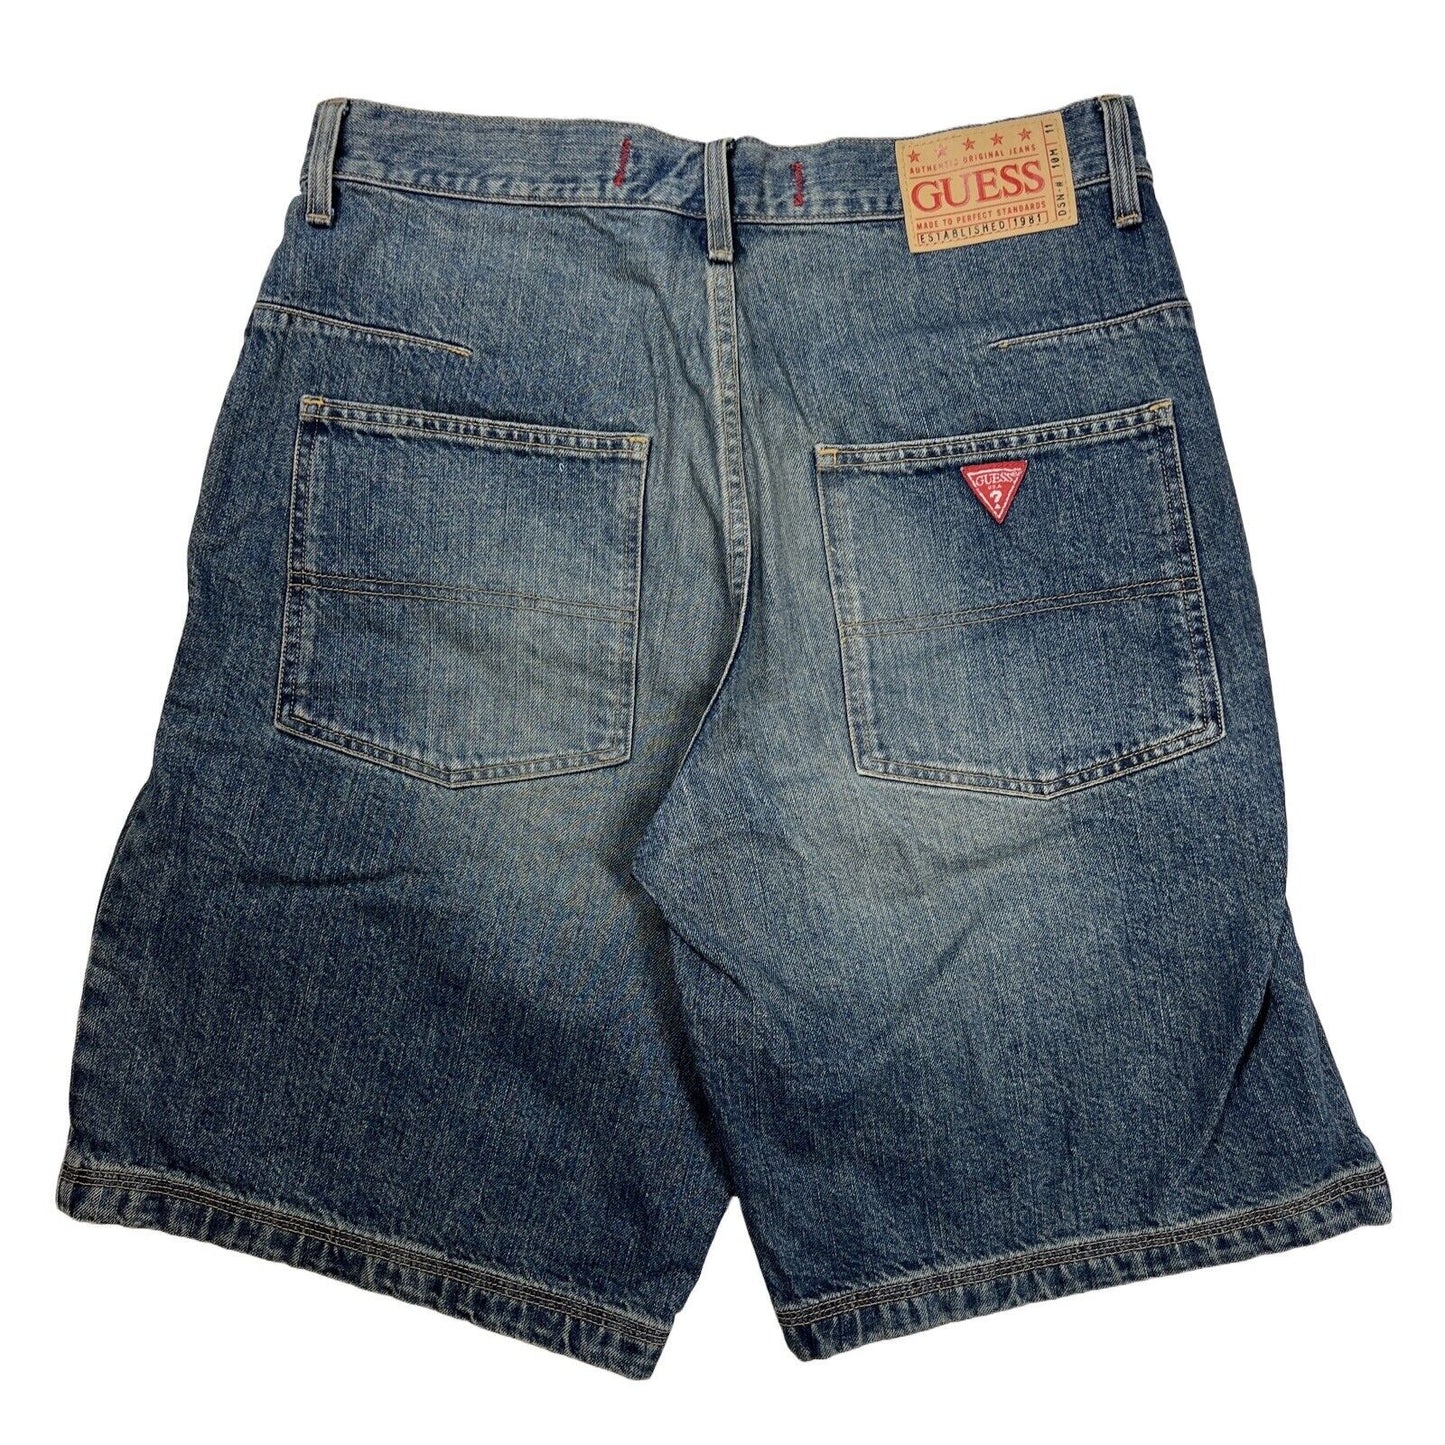 Guess Men's Medium Wash Vintage Denim Jean Shorts - 34